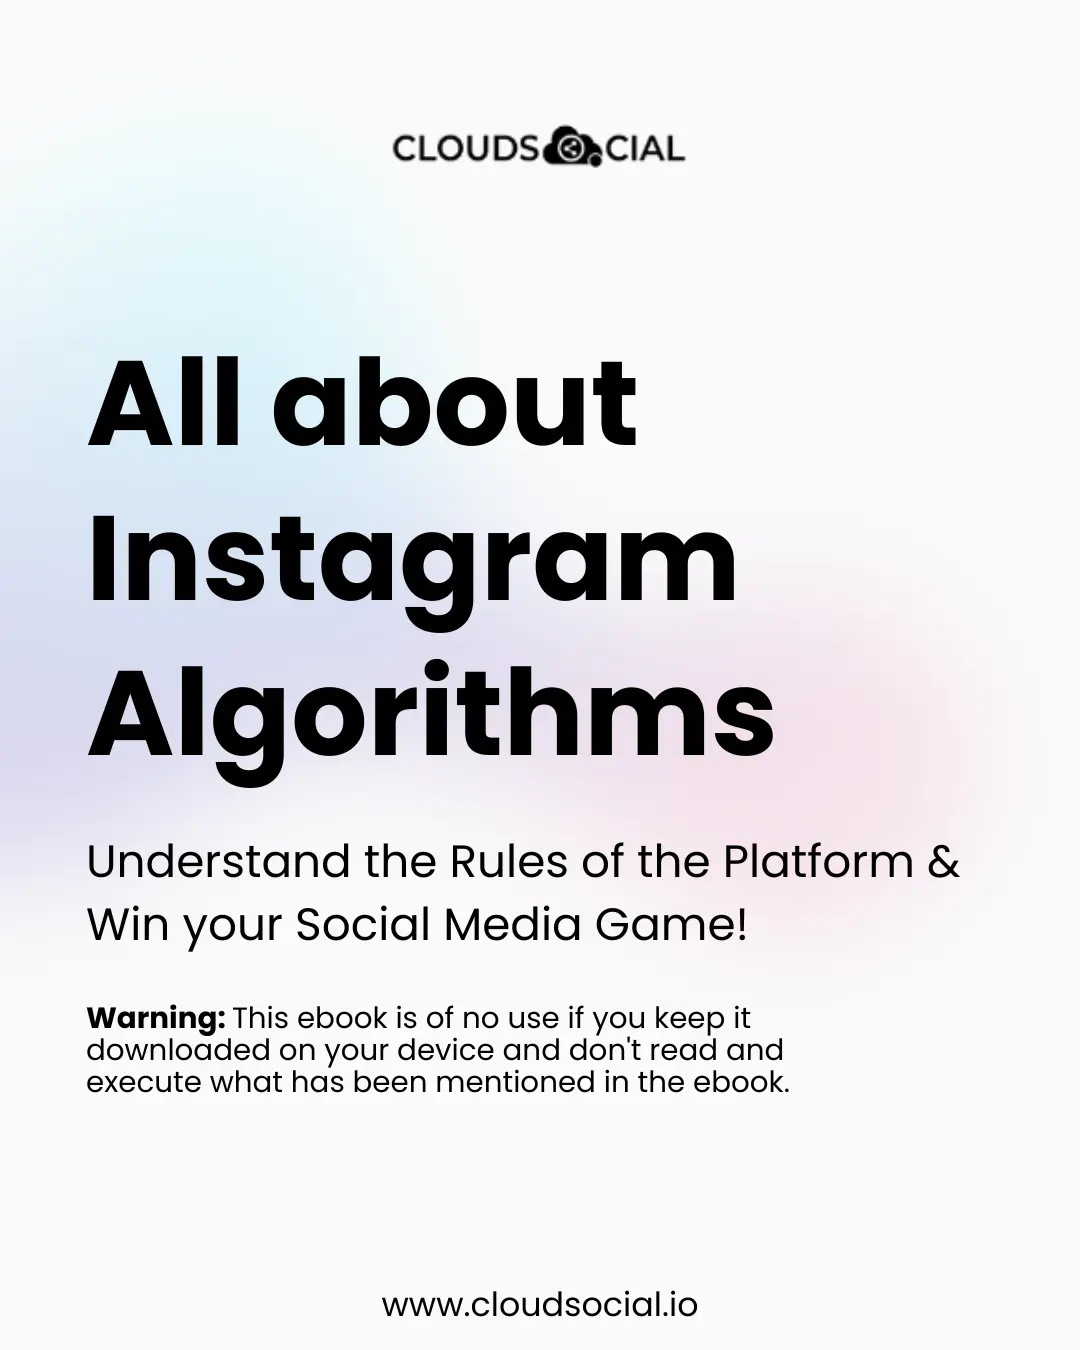 All about Instagram Algorithms